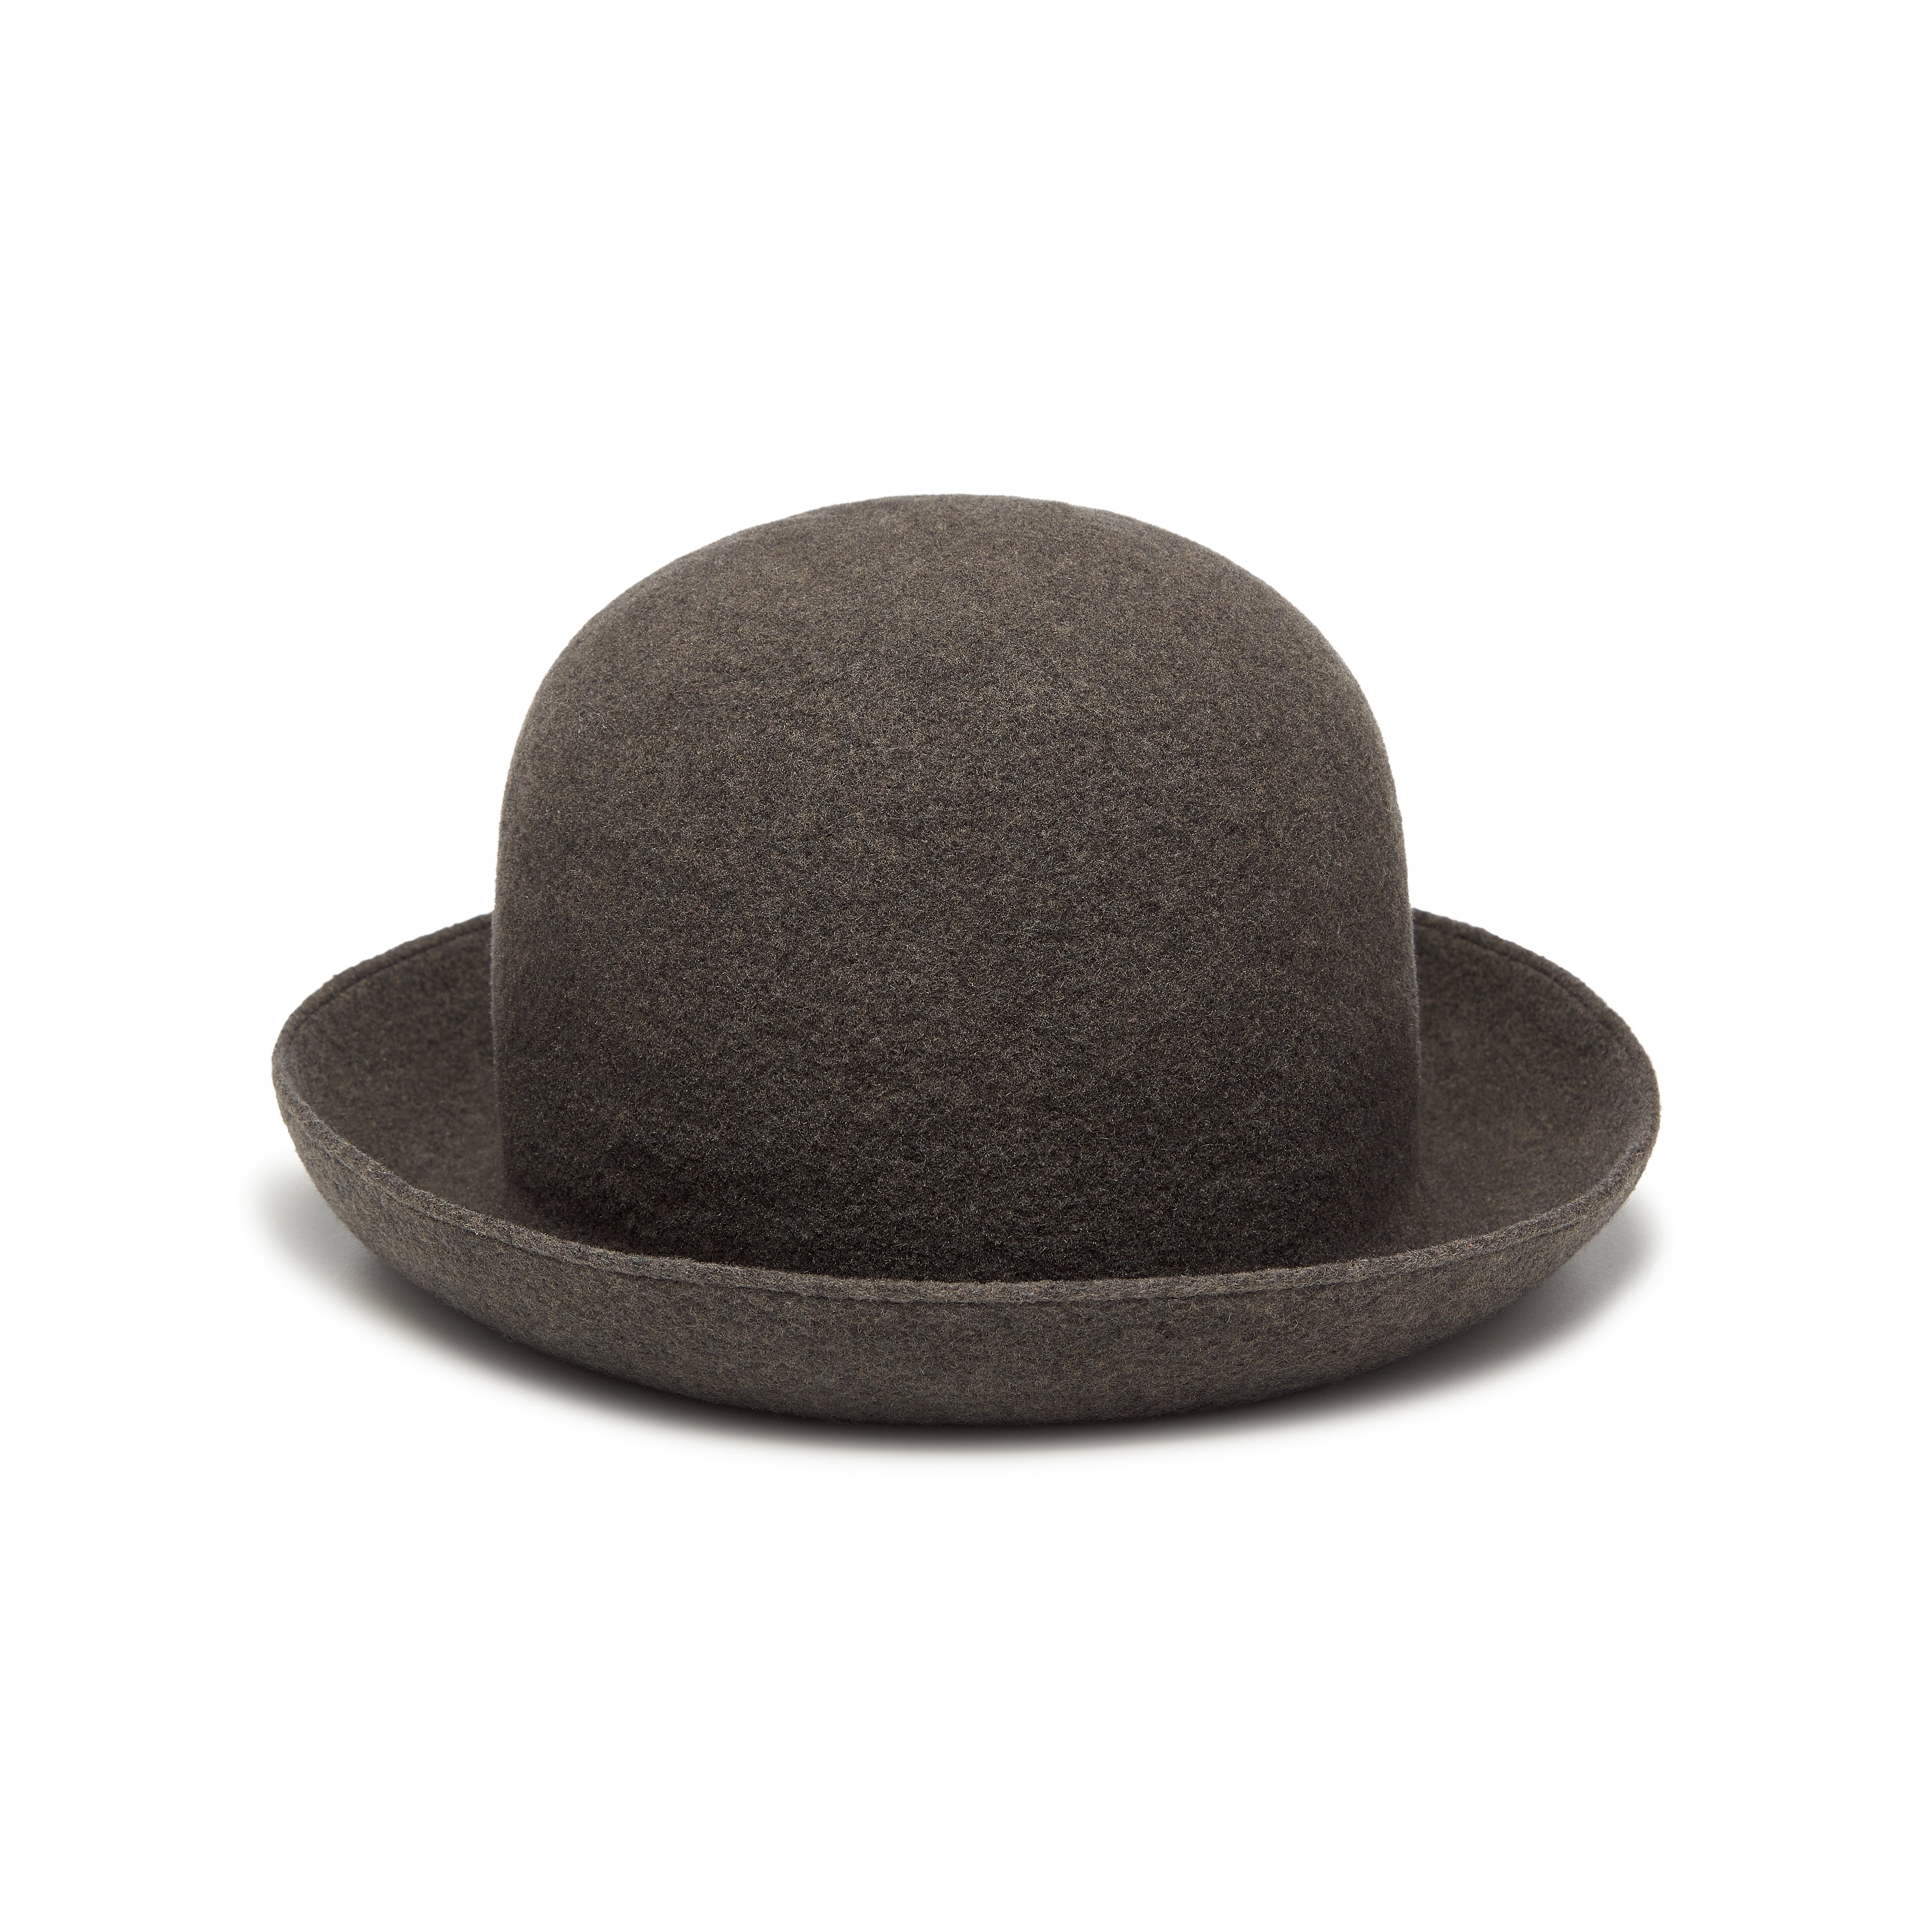 Mature Ha - Women's Widen Bell Hat - (Charcoal)